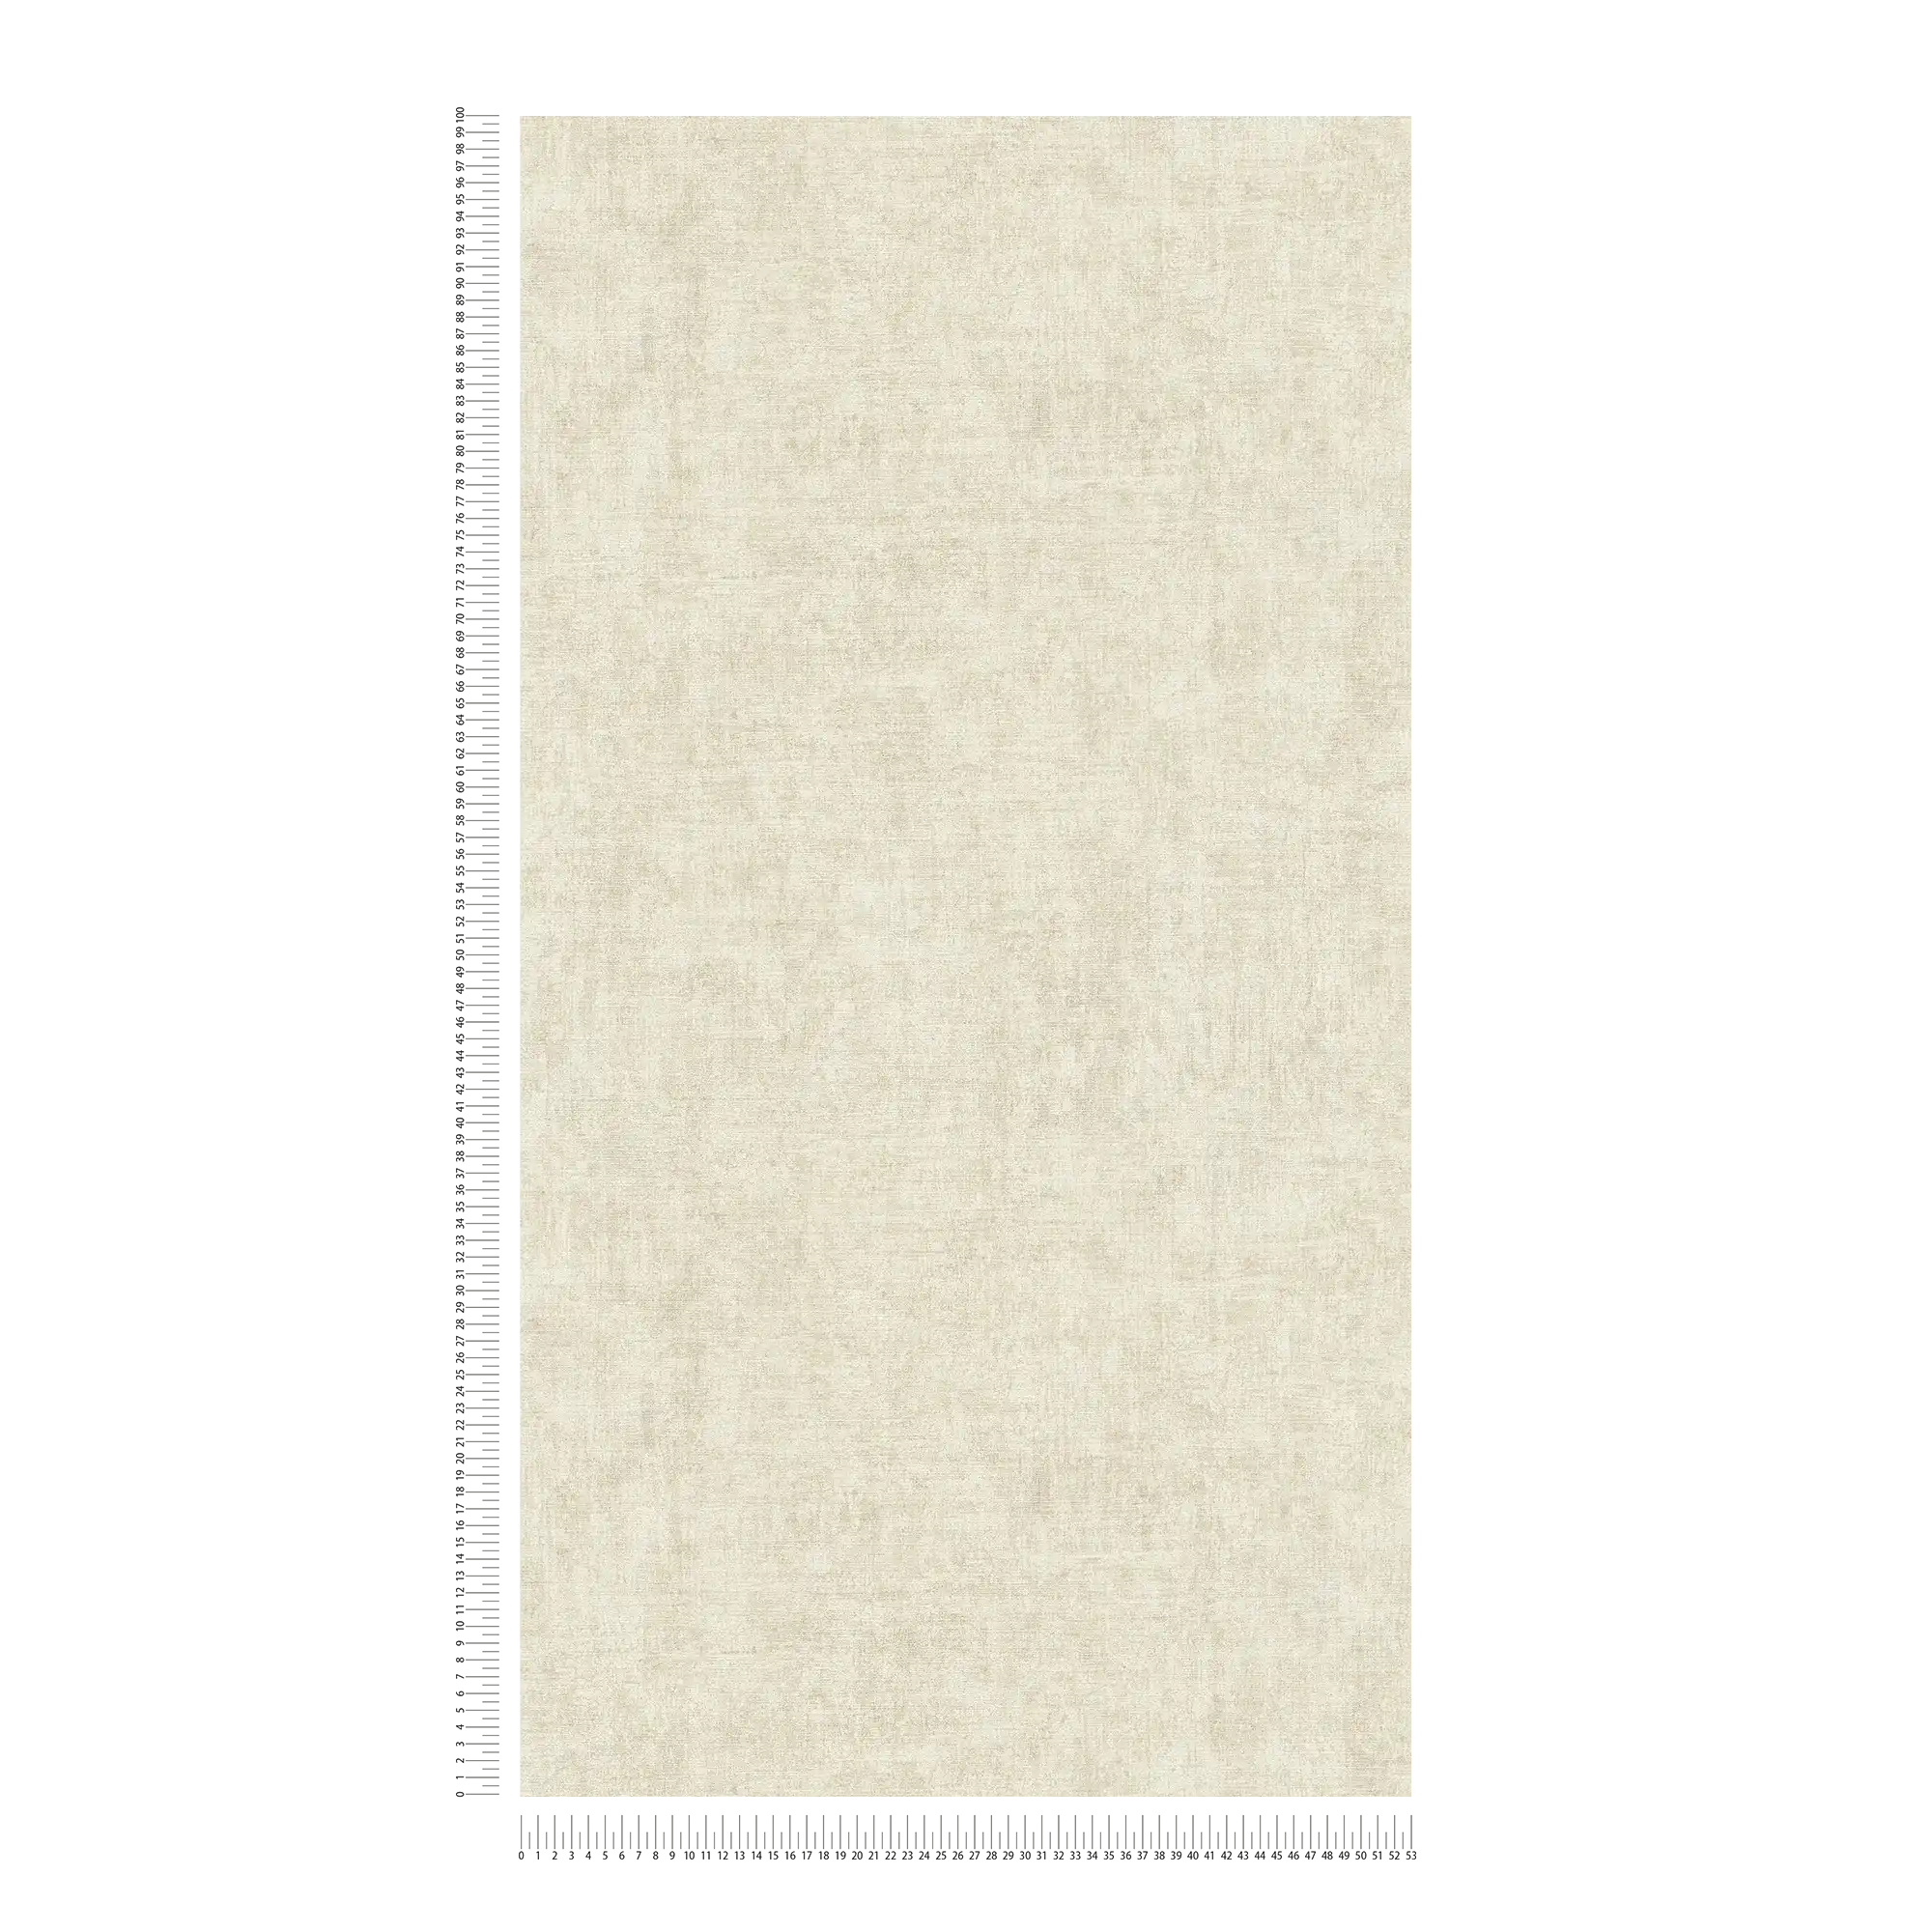             Non-woven wallpaper plain, mottled, textured pattern - cream
        